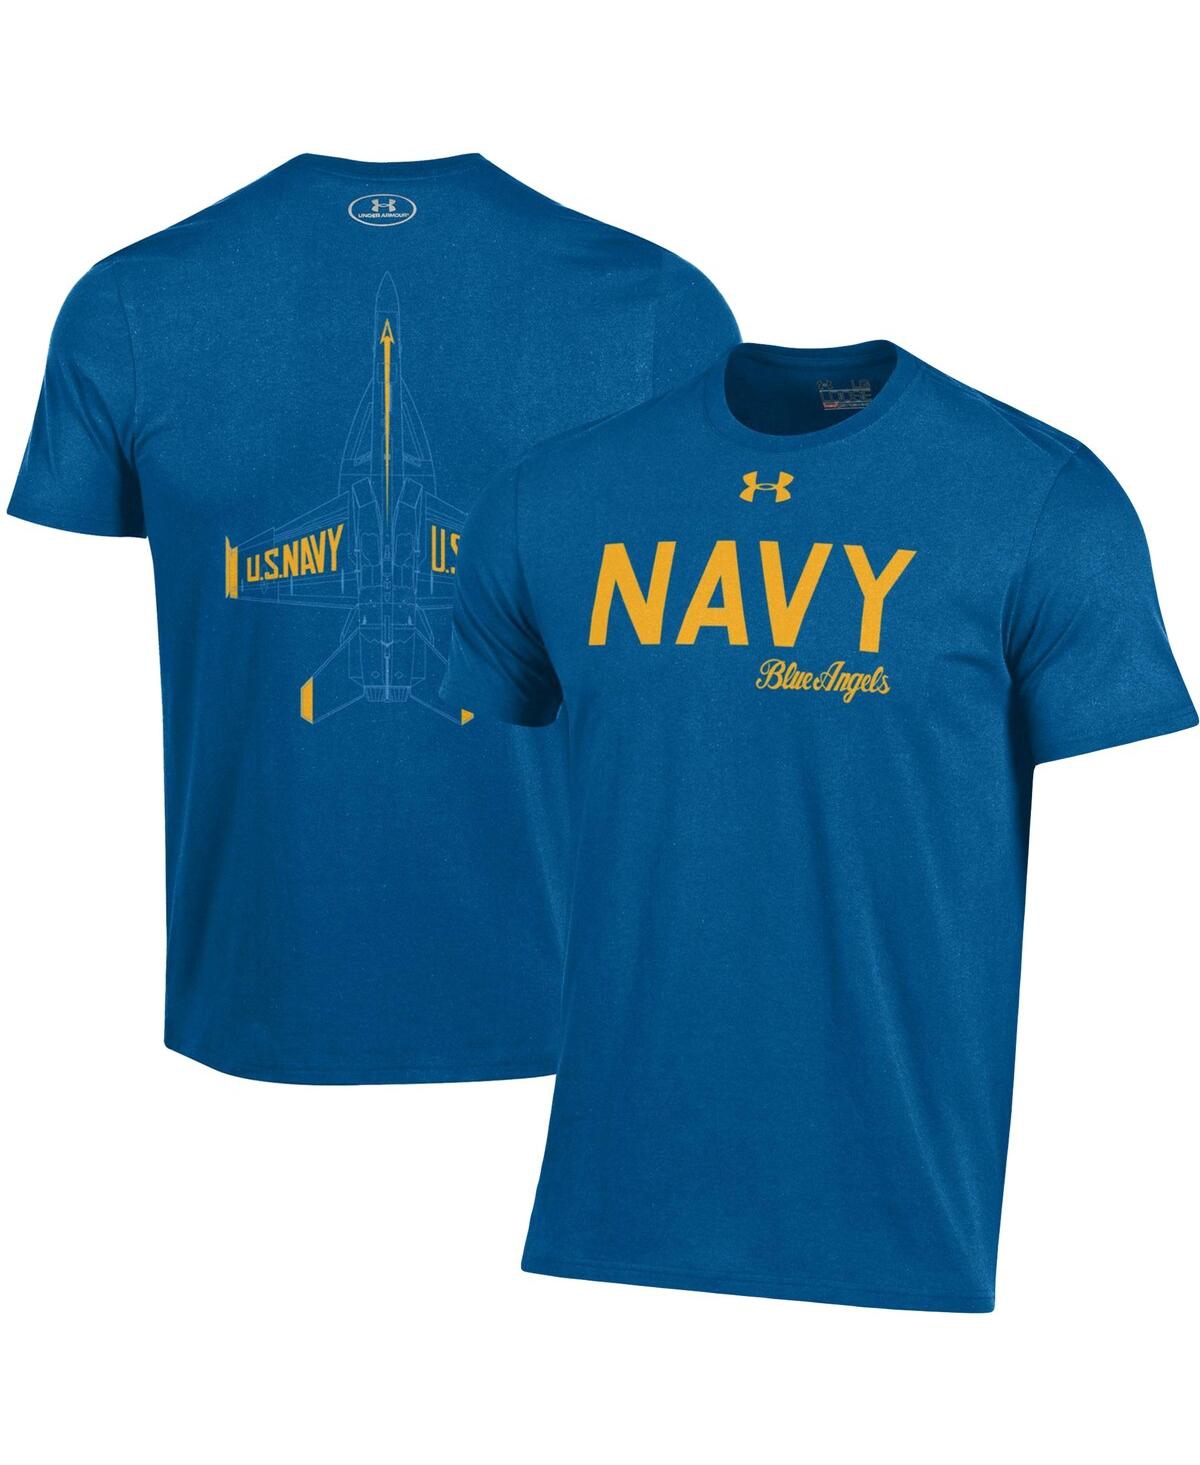 Under Armour Men's  Royal Navy Midshipmen Blue Angels Performance Raglan Hoodie T-shirt